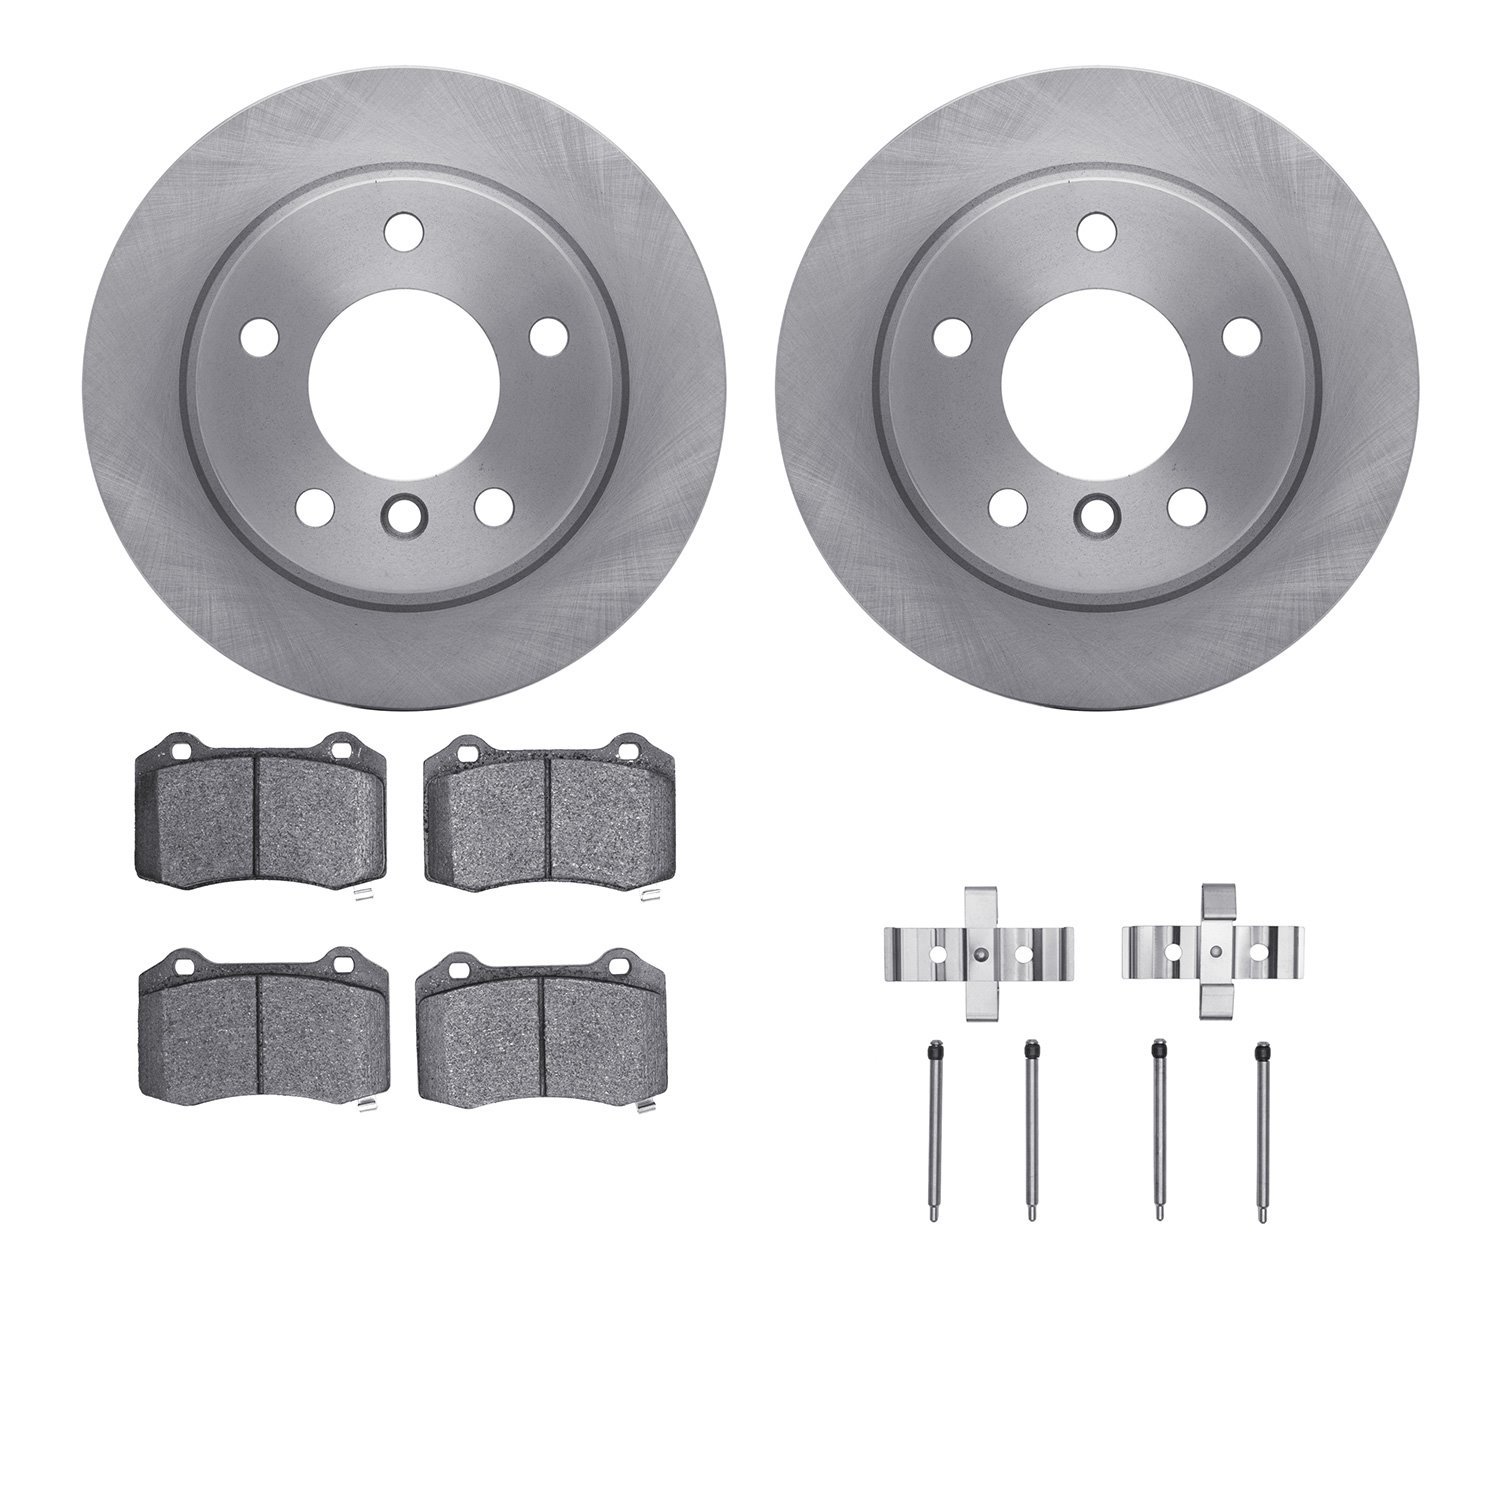 6412-39003 Brake Rotors with Ultimate-Duty Brake Pads Kit & Hardware, Fits Select Mopar, Position: Rear